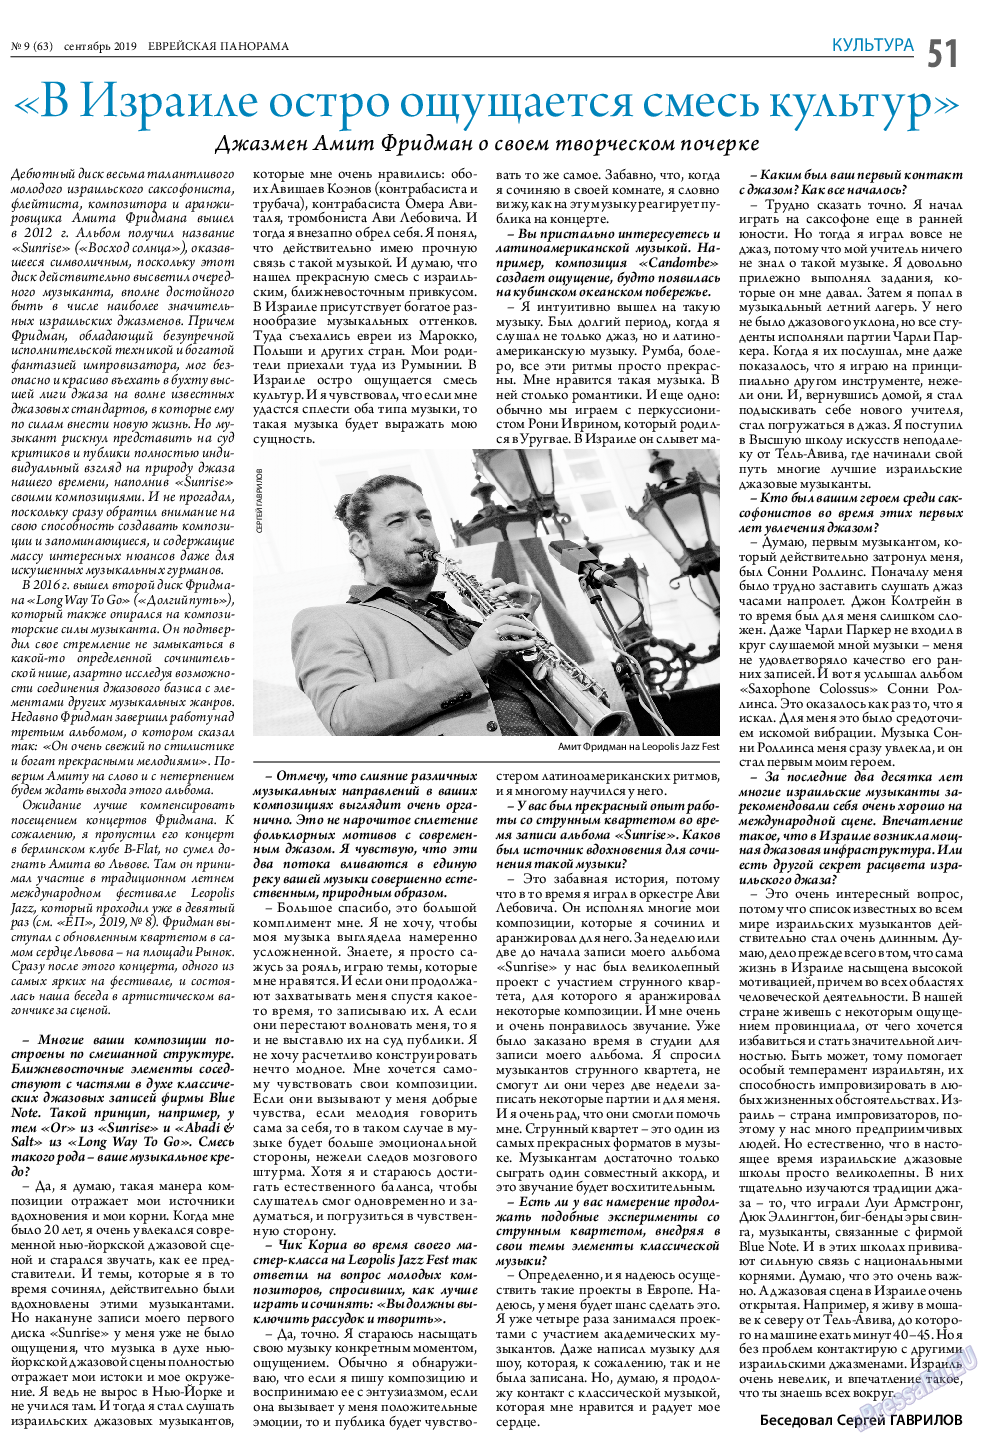 Еврейская панорама, газета. 2019 №9 стр.51